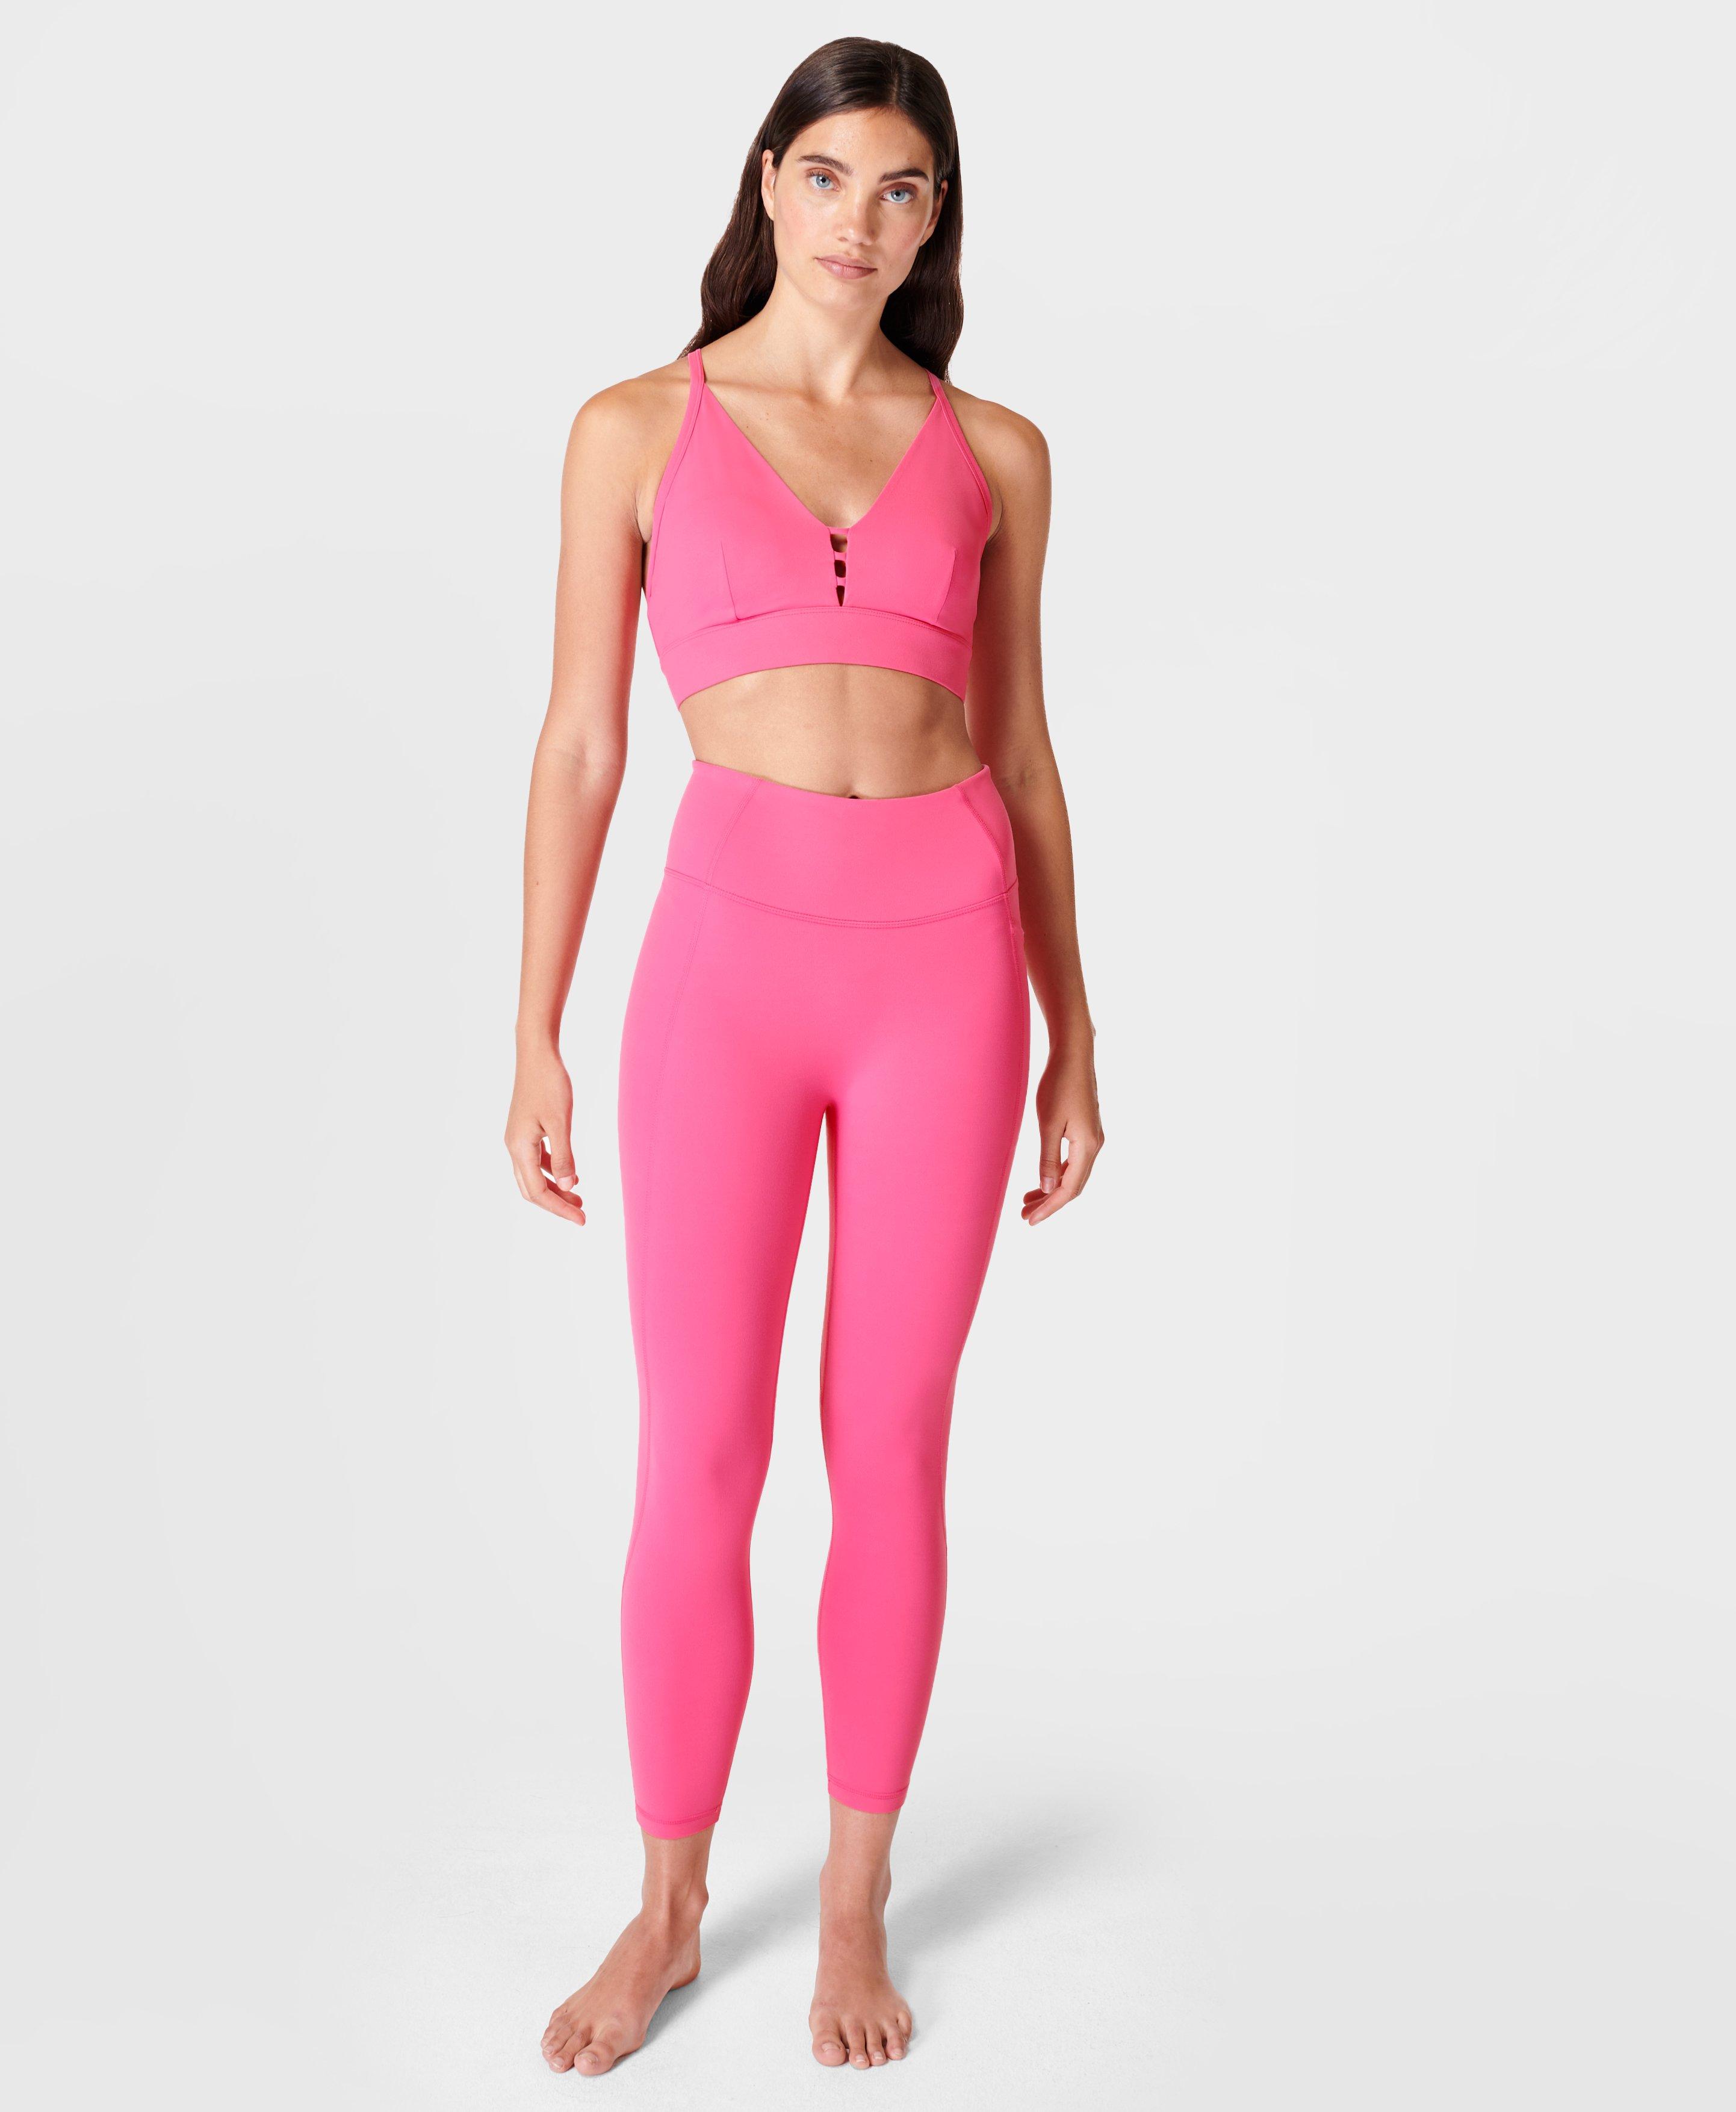 Sweaty Betty Women's Power Medium Impact Sports Bra, Hot Pink, X-Large :  : Clothing, Shoes & Accessories